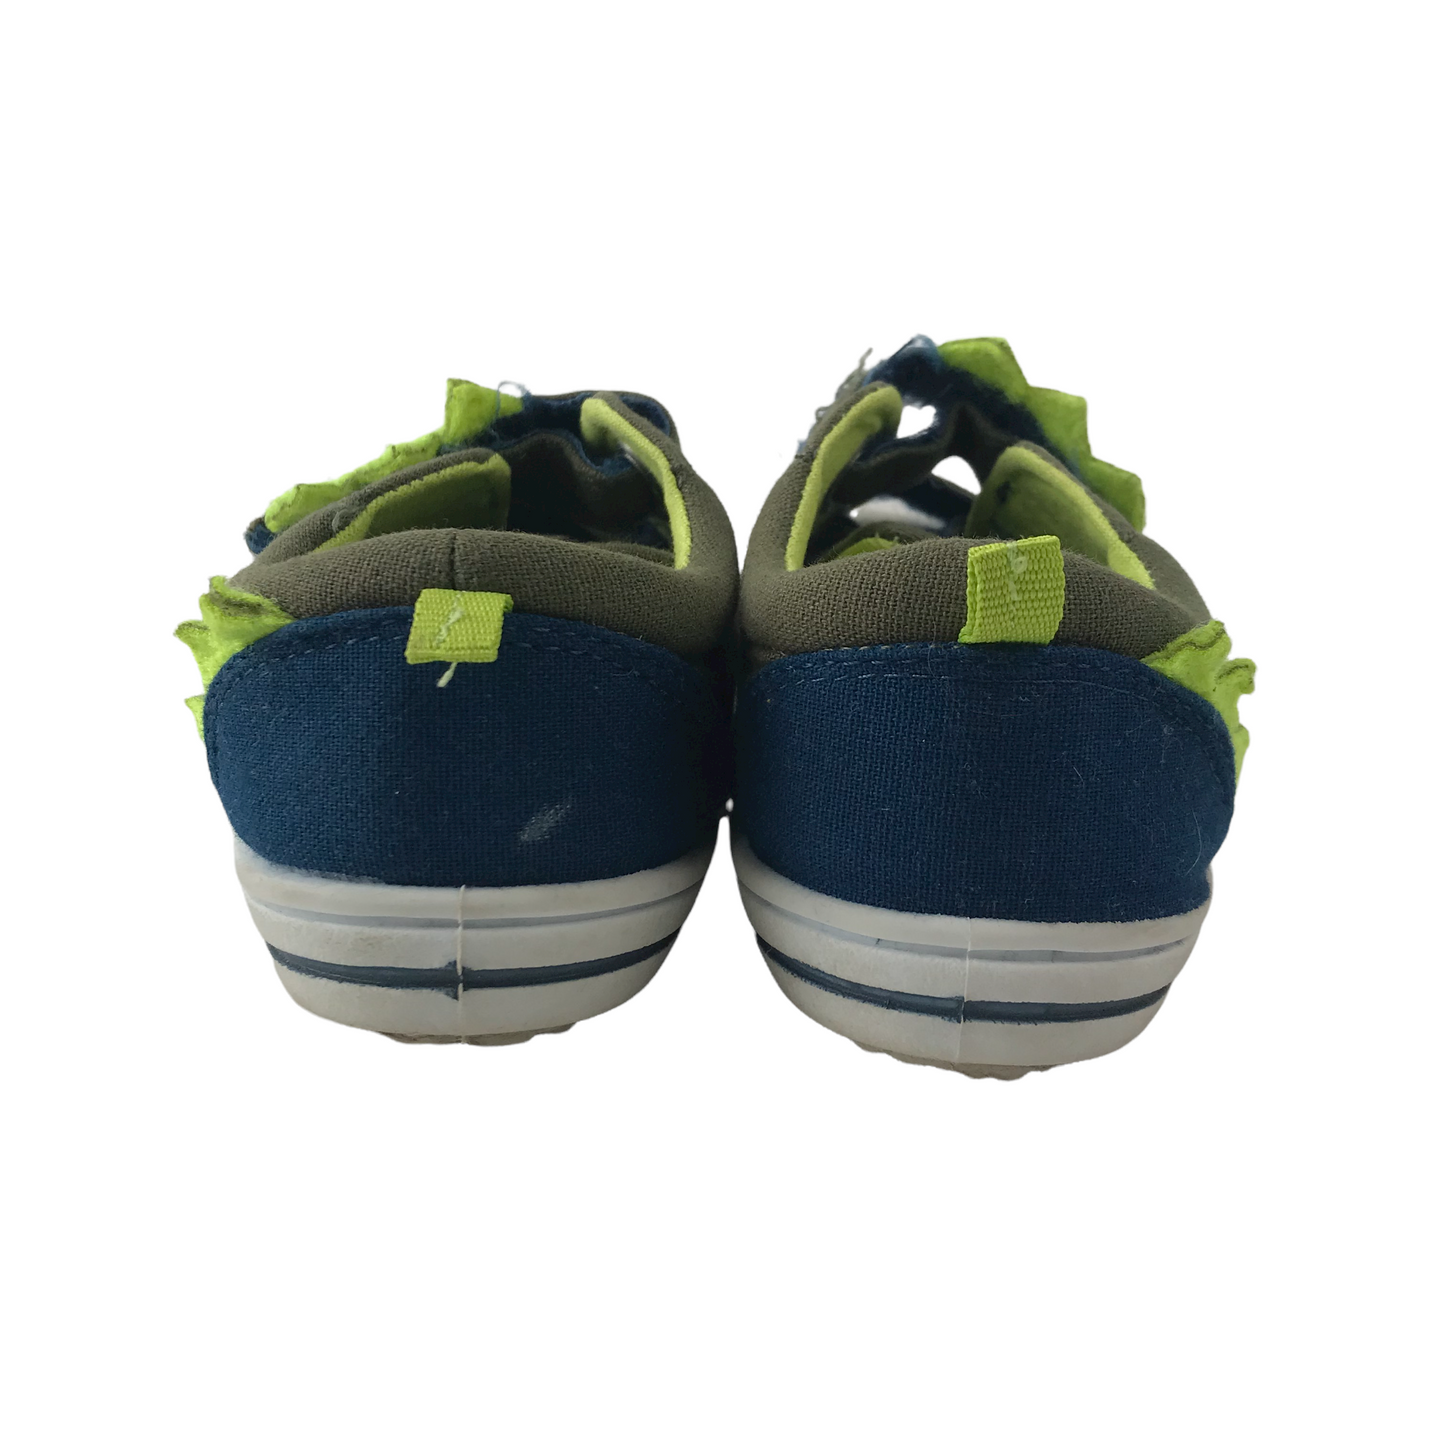 Tu Khaki Green Crocodile Trainers with Straps Shoe Size 11 (jr)